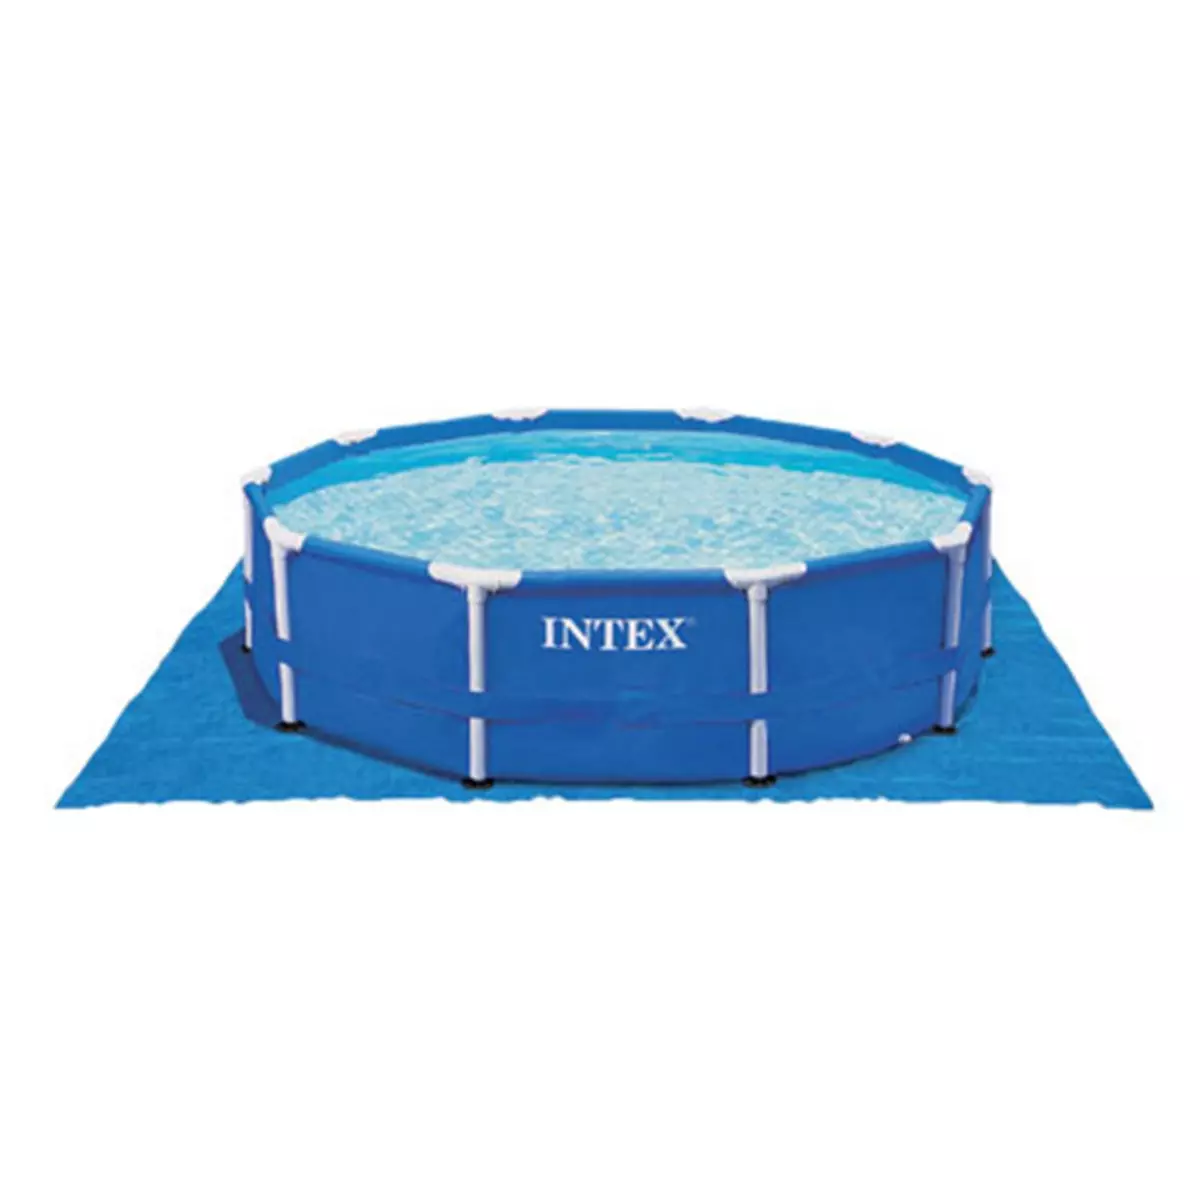 INTEX Tapis de sol pour piscine ronde Ø 5,49 m - Intex